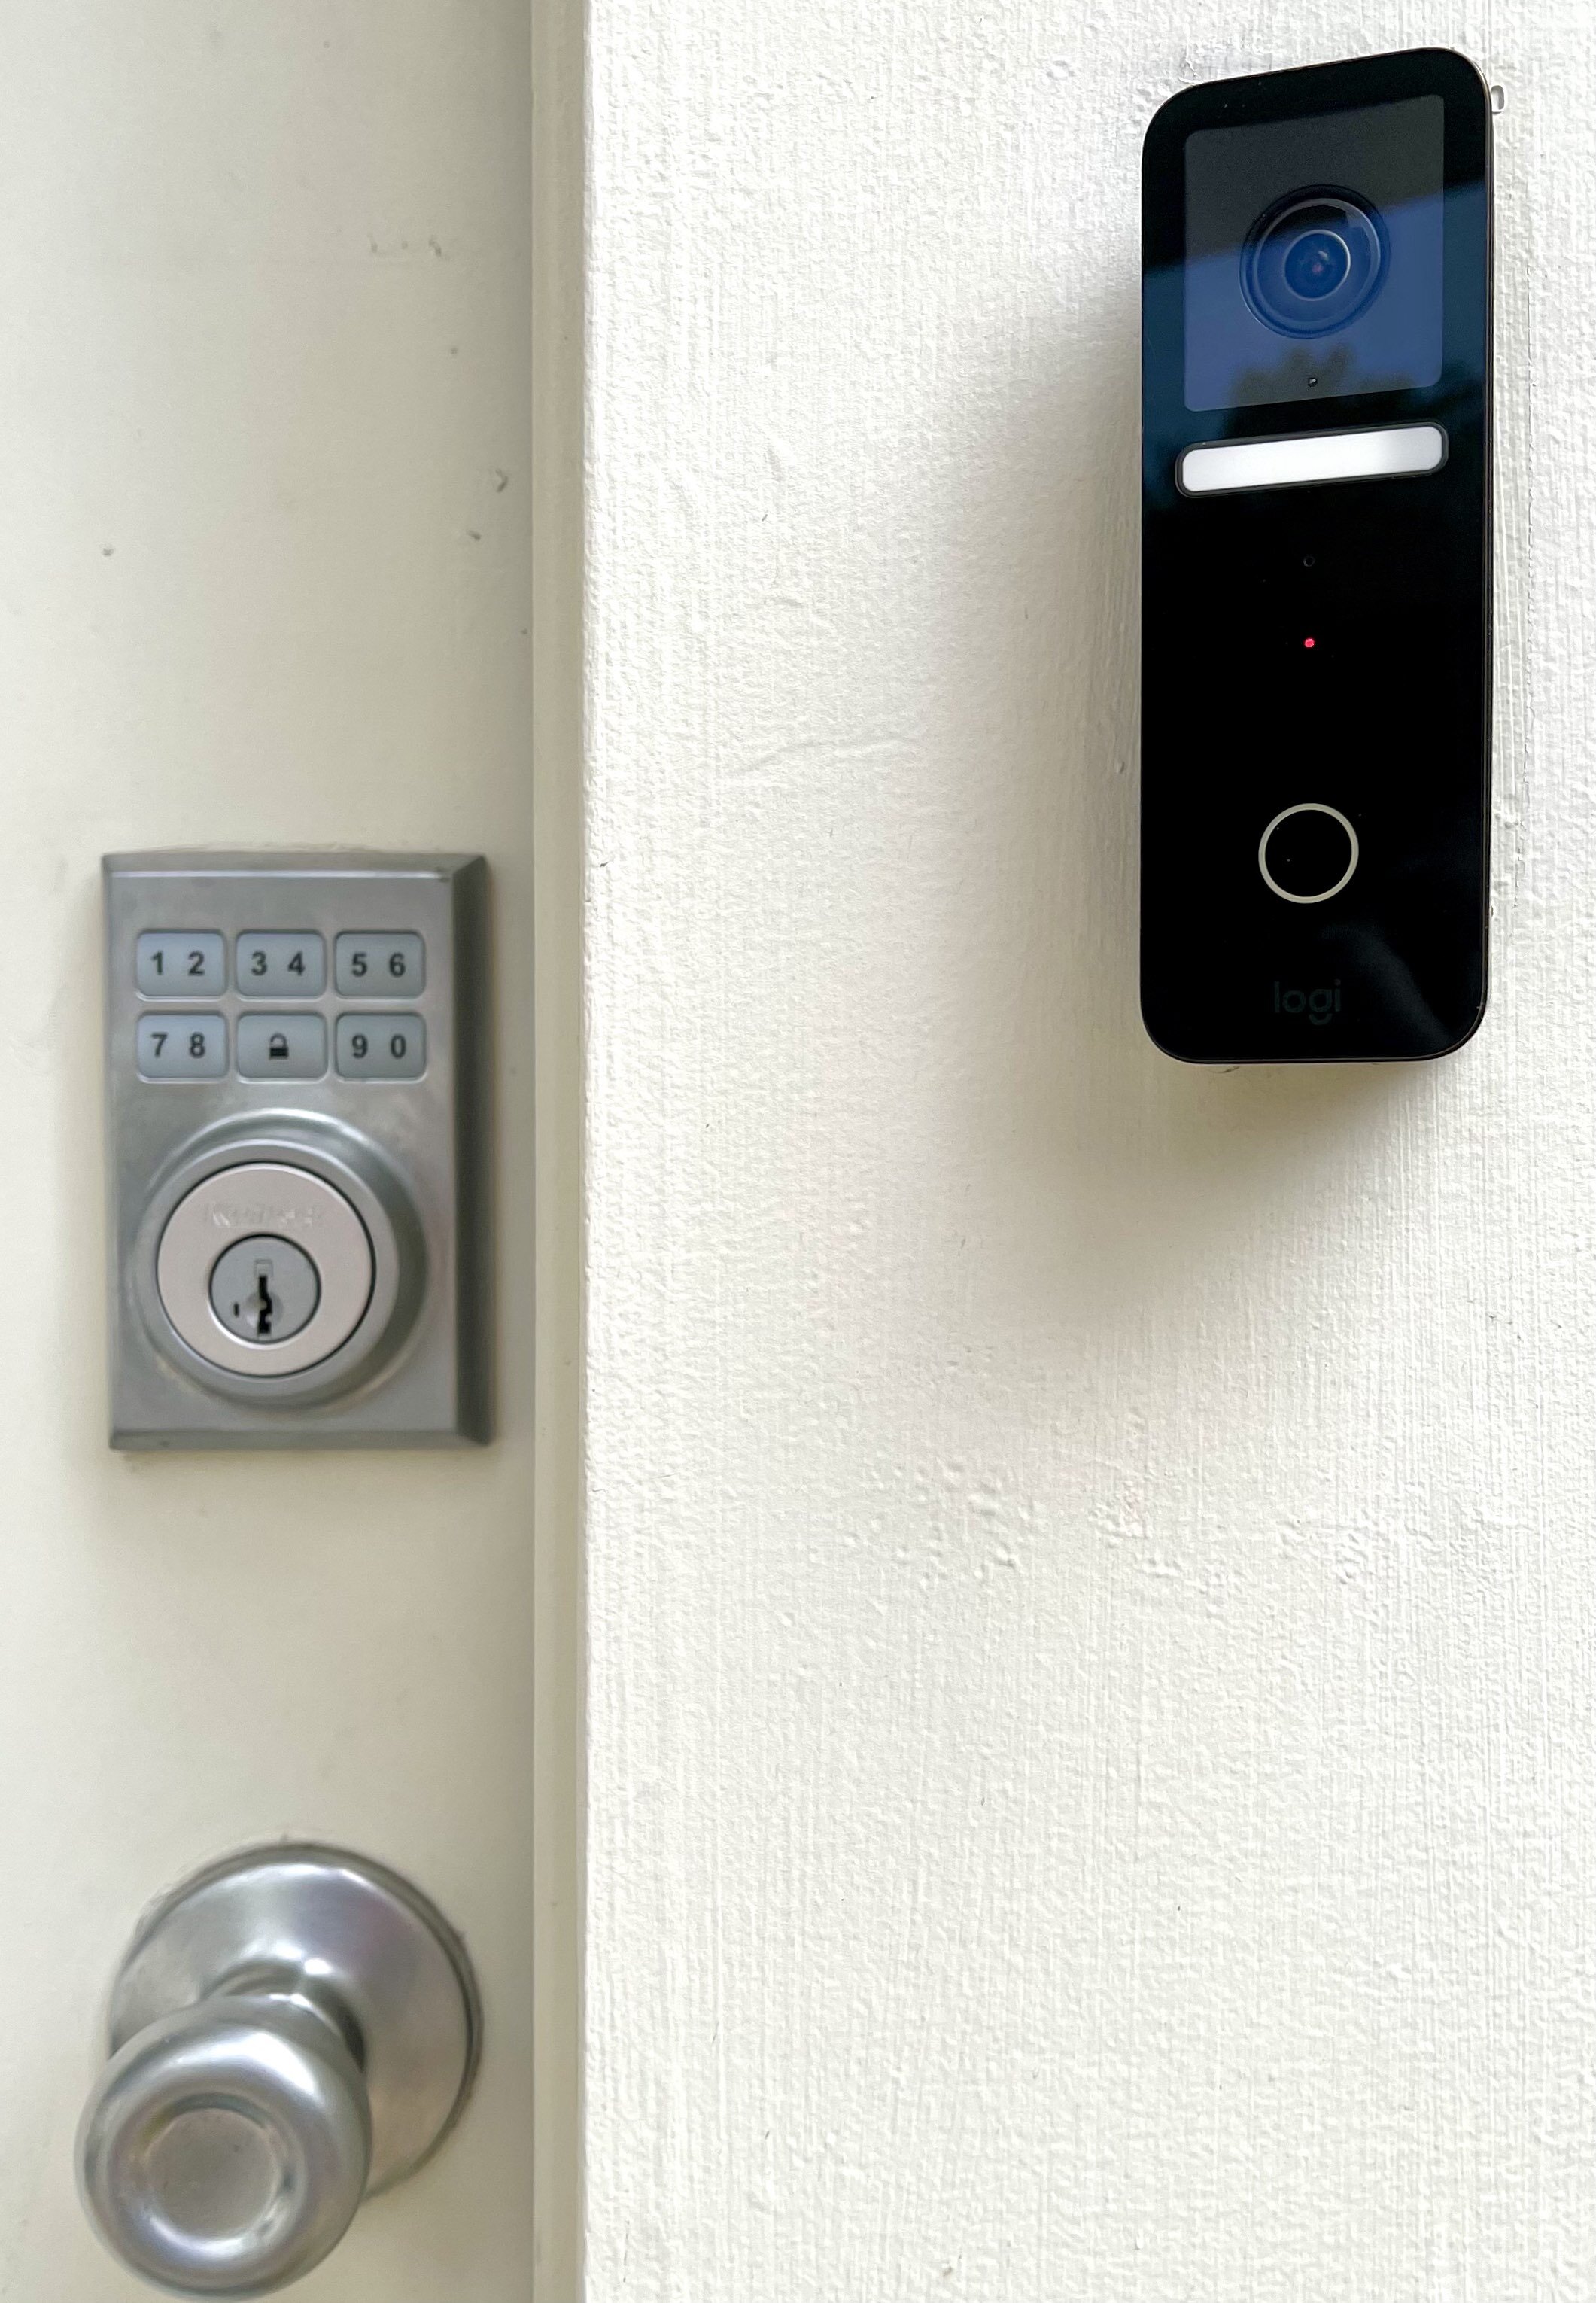 Logitech Circleview Doorbell and Kwikset Electronic Keypad